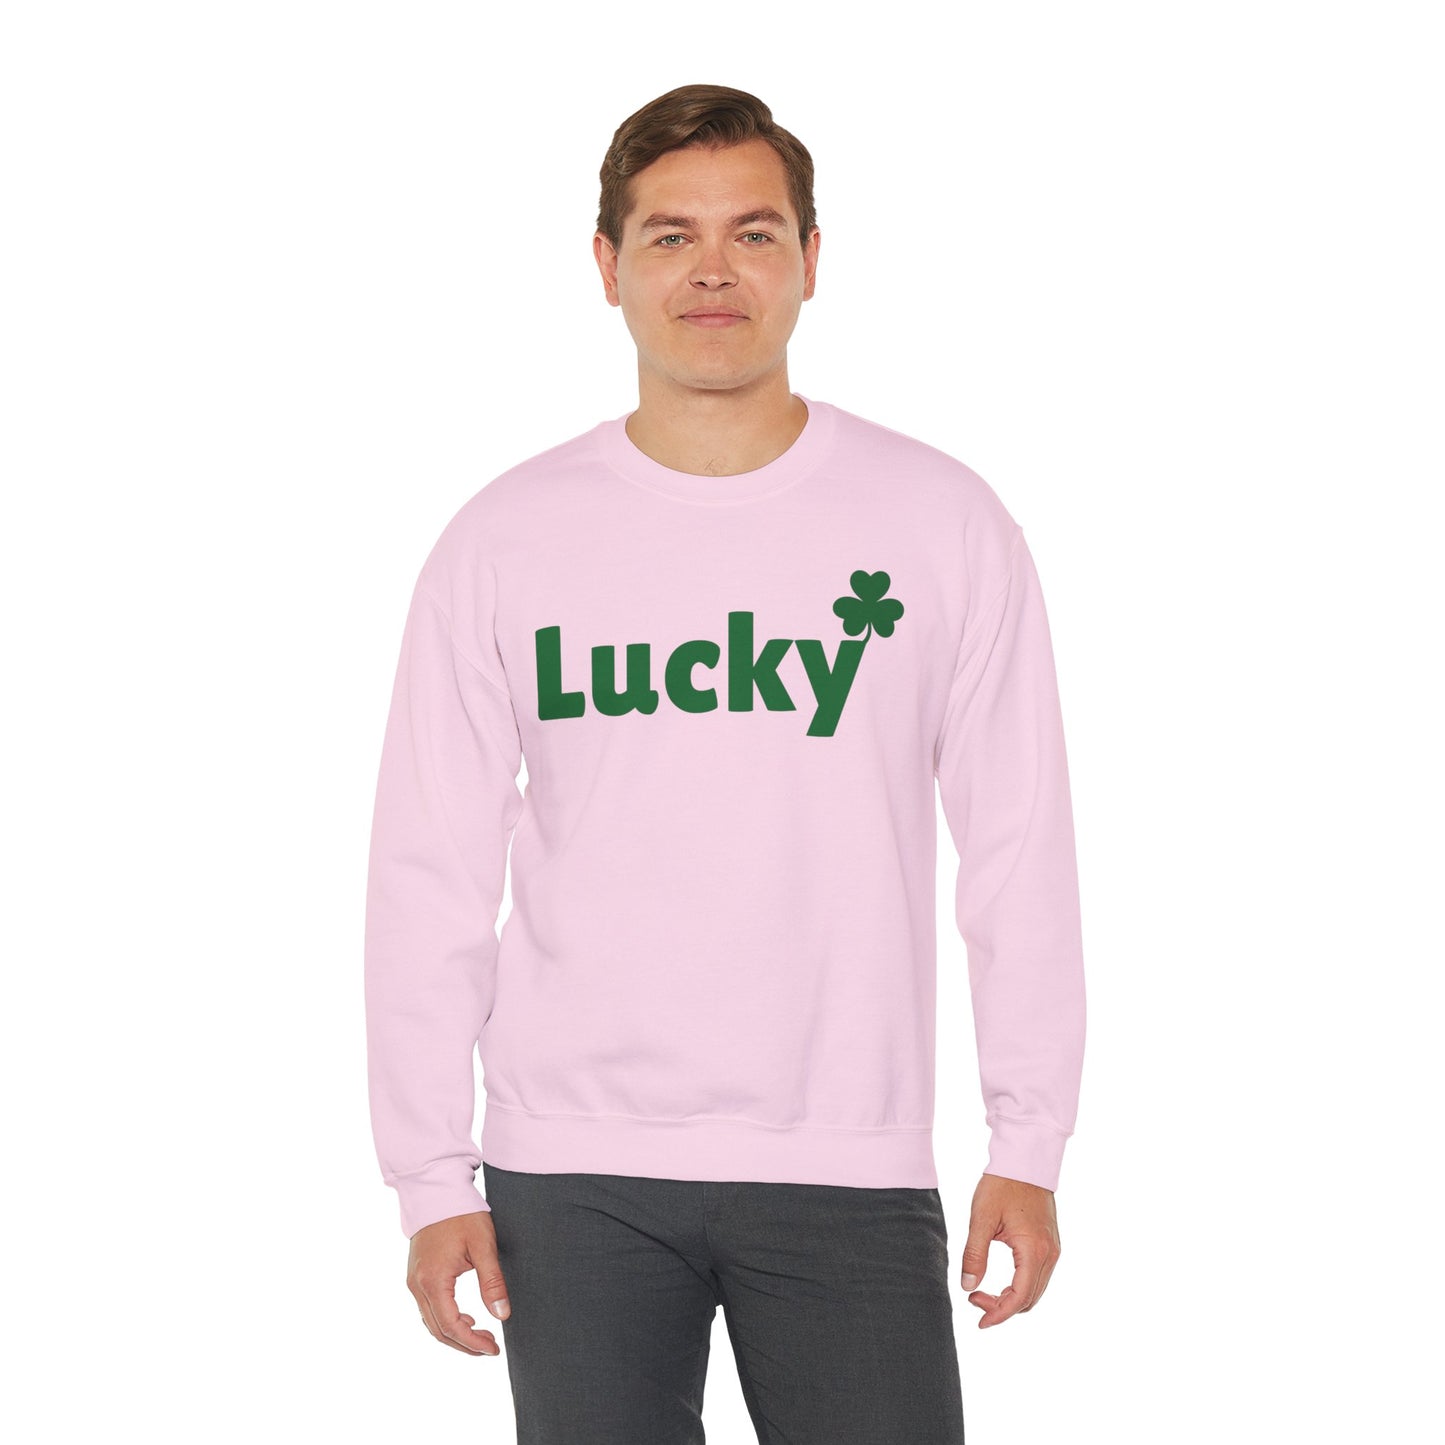 LUCKY Sweater, Clover Shirt St Patricks Day Sweater for Women and Men